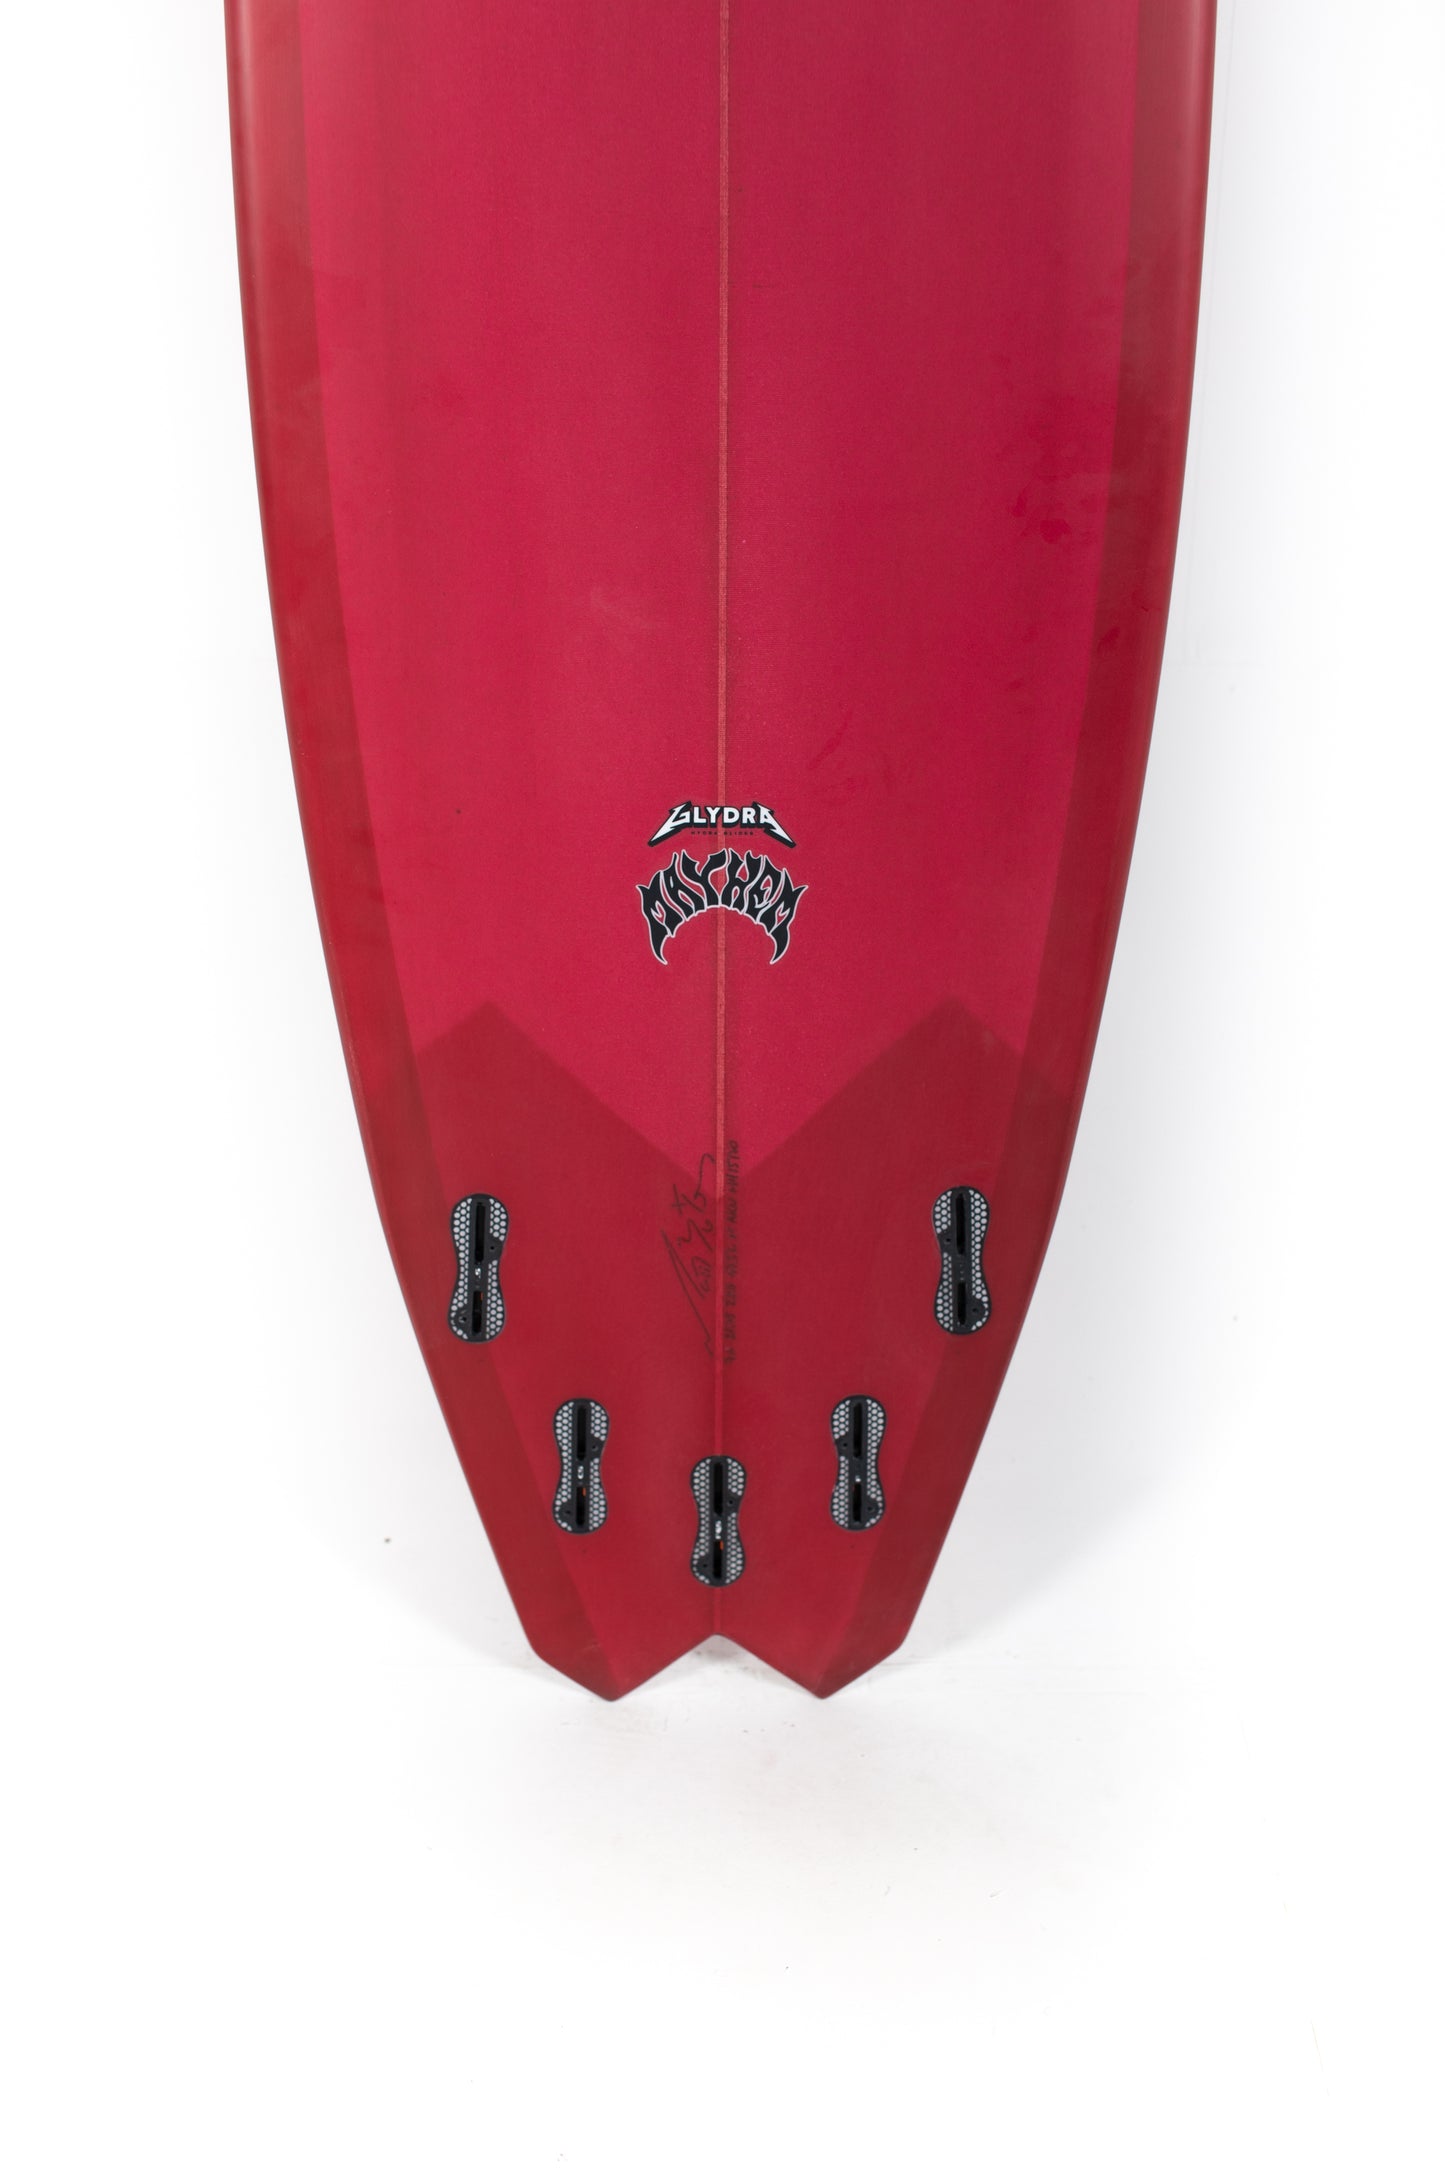 
                  
                    Pukas Surf Shop - Lost Surfboards - GLYDRA by Matt Biolos - 7'0" x 21,75 x 2,88 x 47,5L - MH15170
                  
                